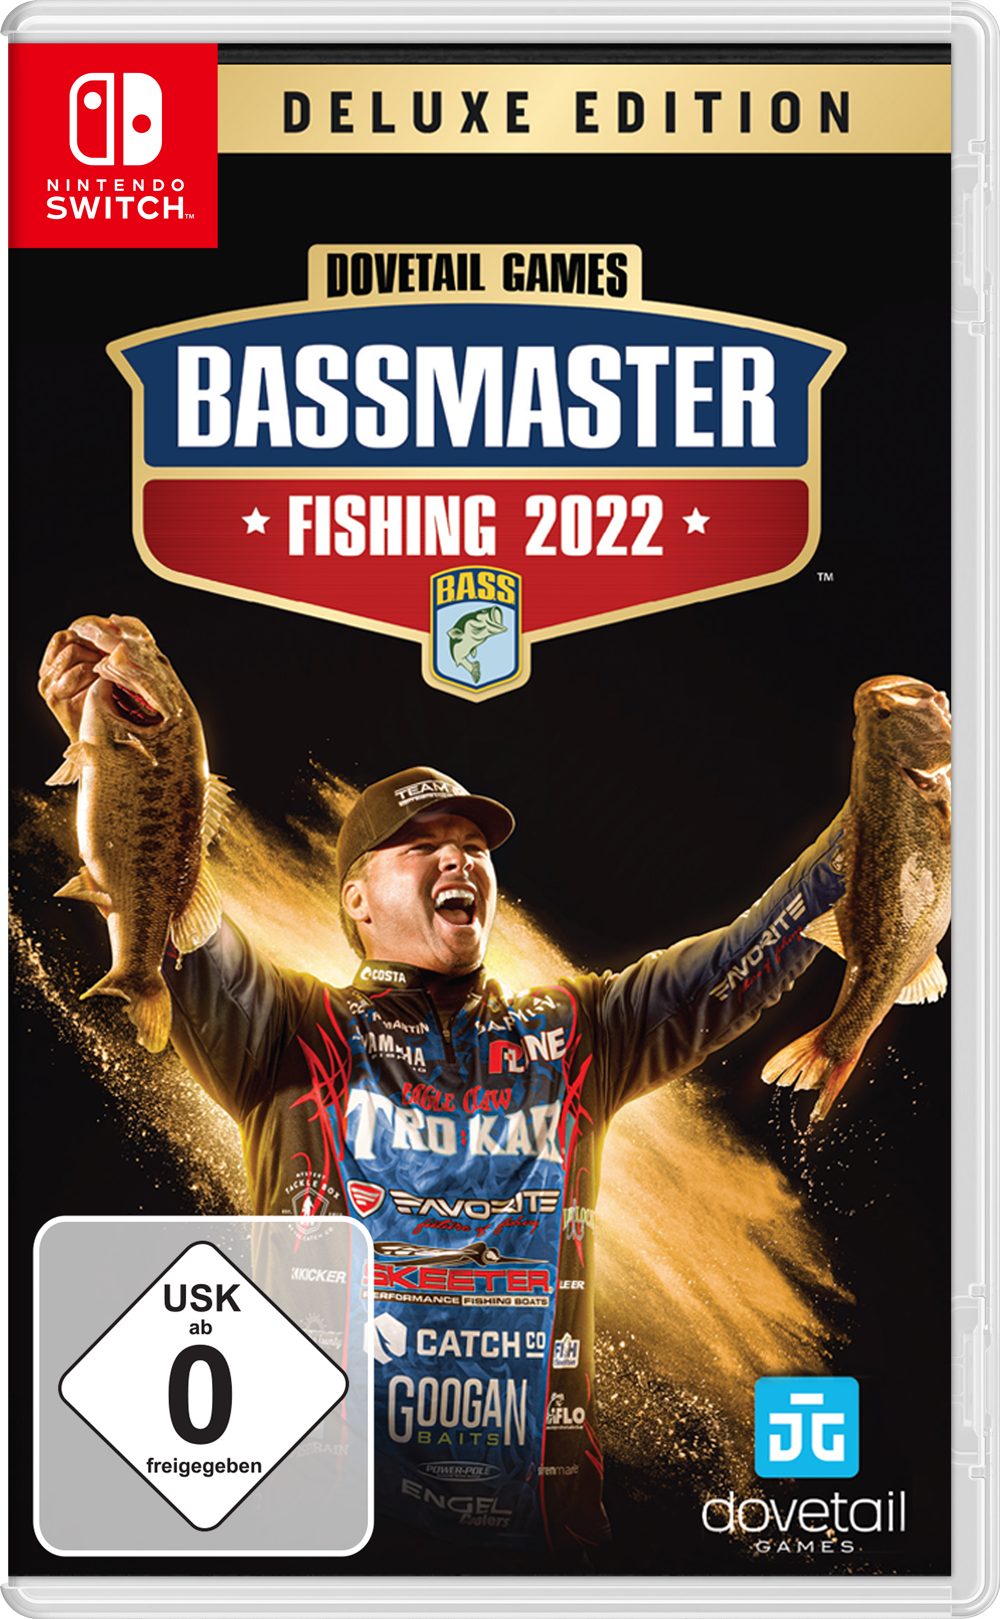 2022 Nintendo Edition Switch Bassmaster Deluxe Fishing